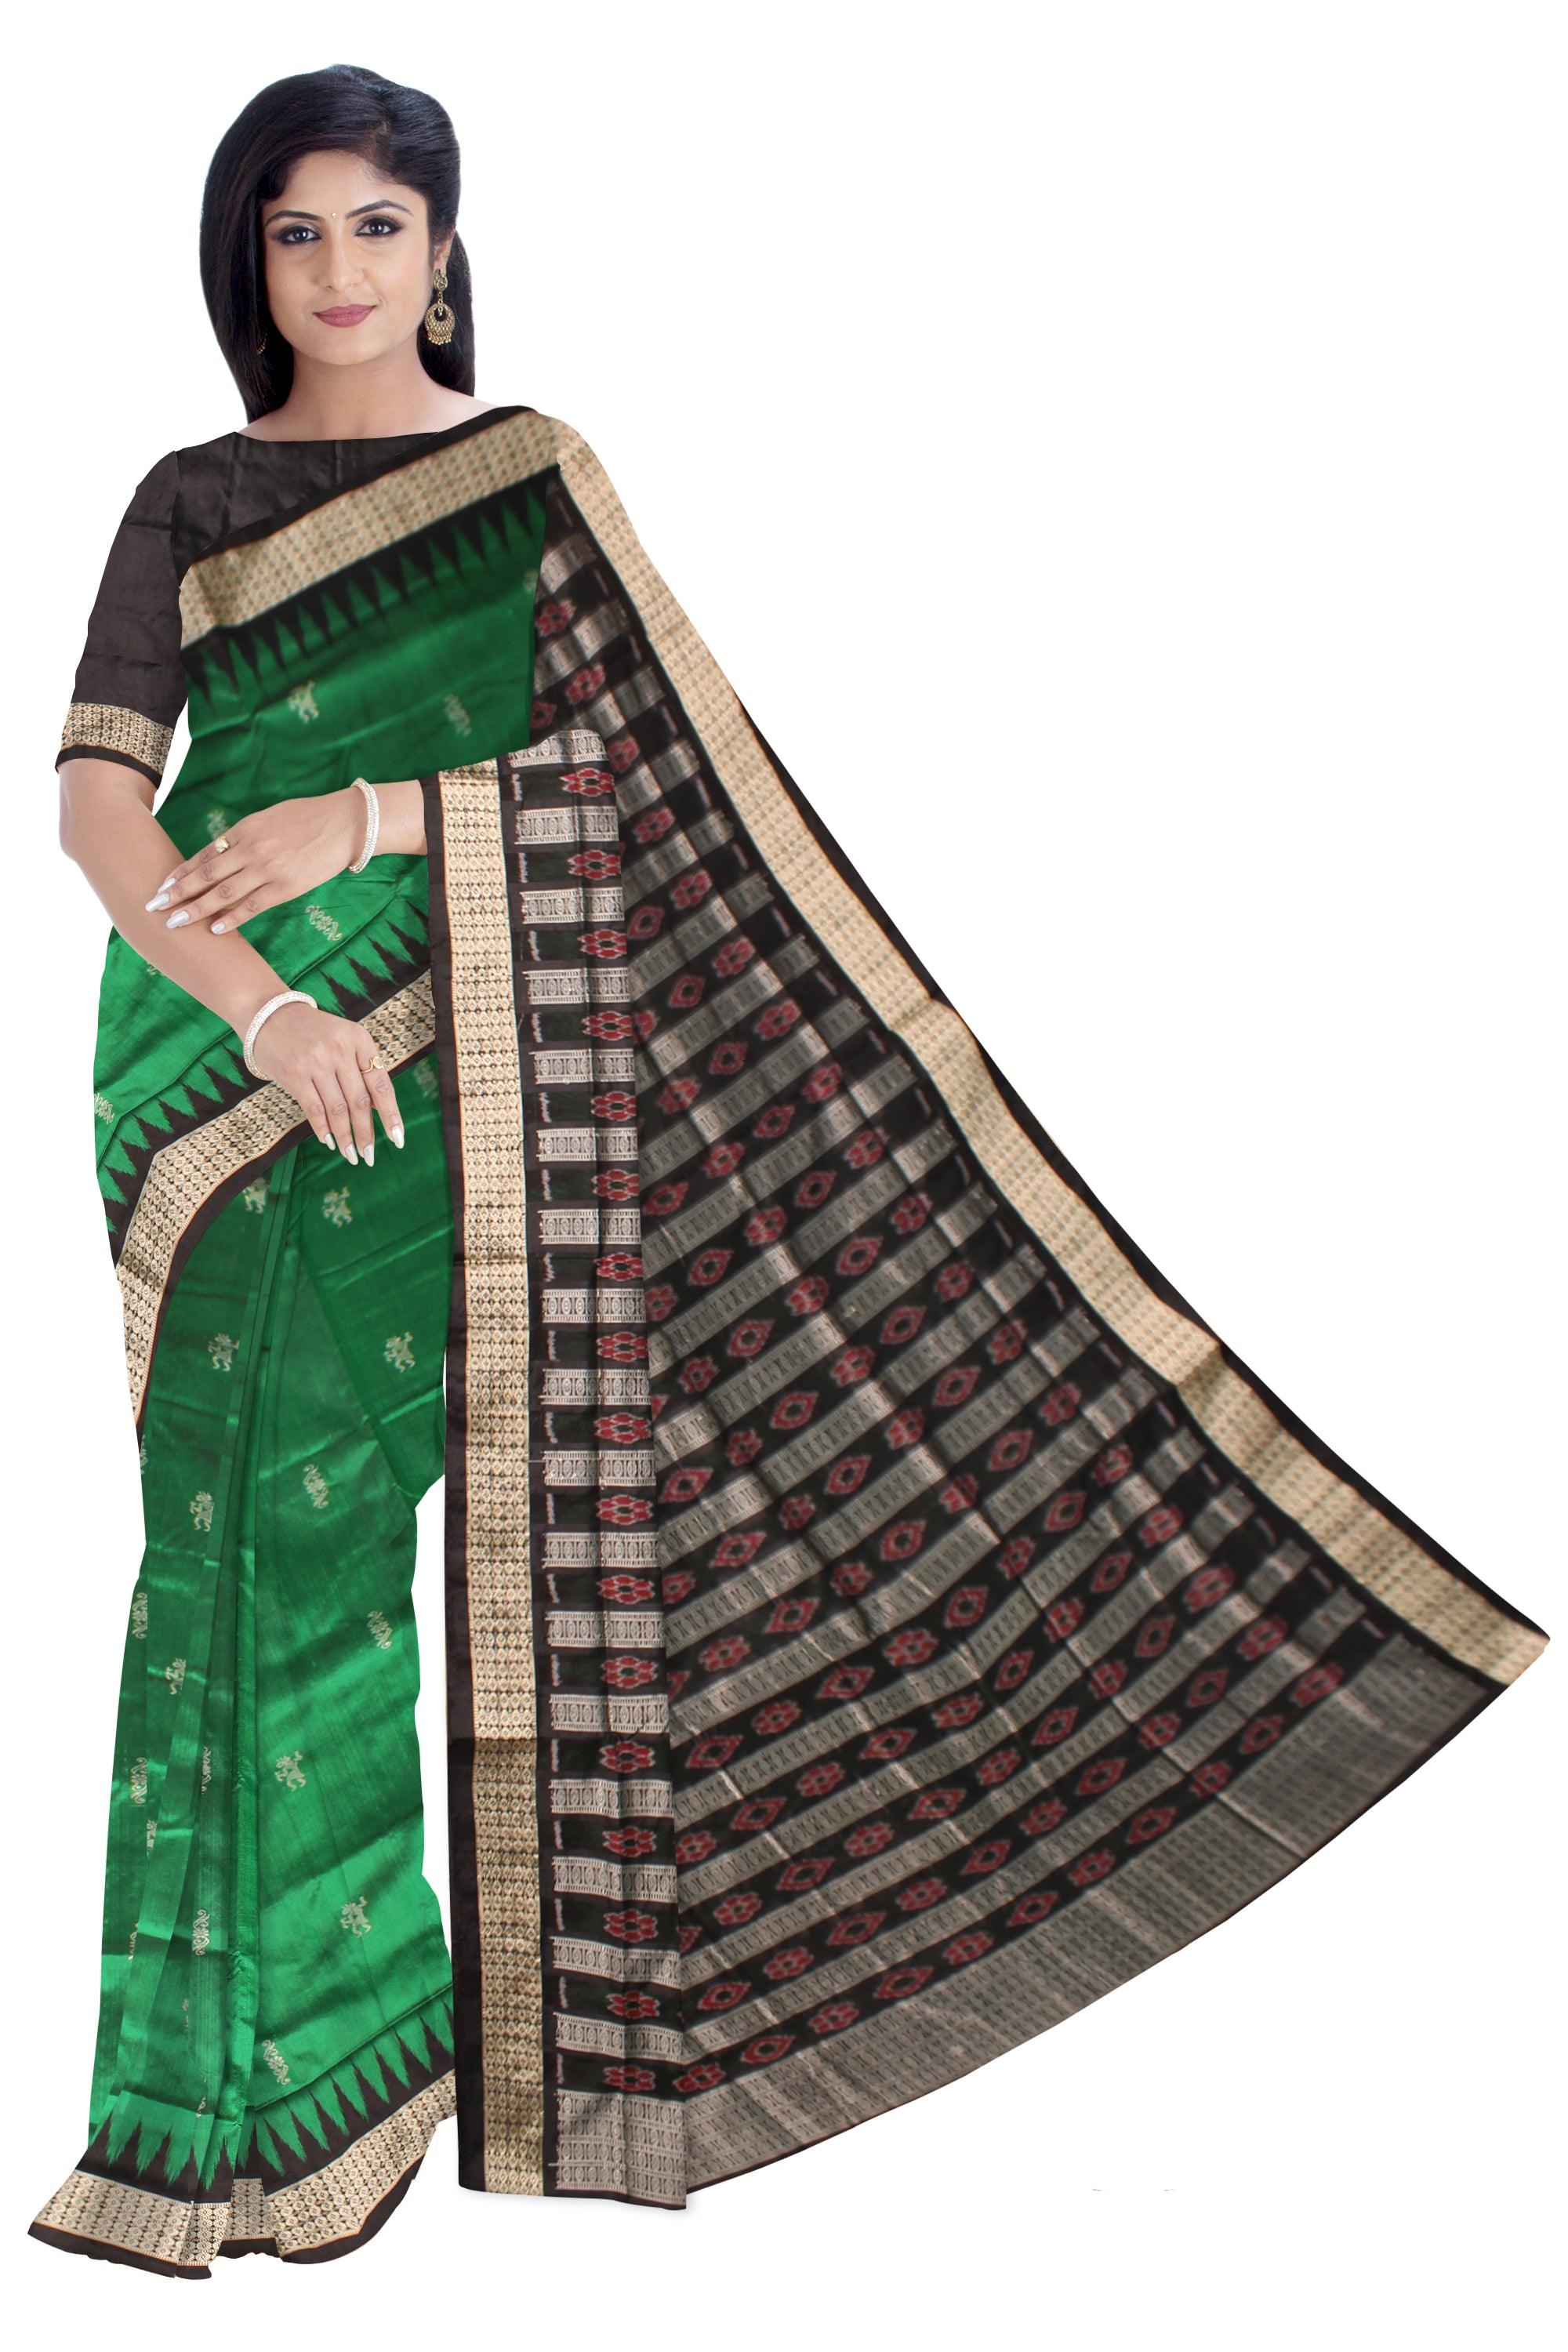 Sambalpuri Pata Saree in  Green Color in botty  design with Black Border with blouse piece. - Koshali Arts & Crafts Enterprise